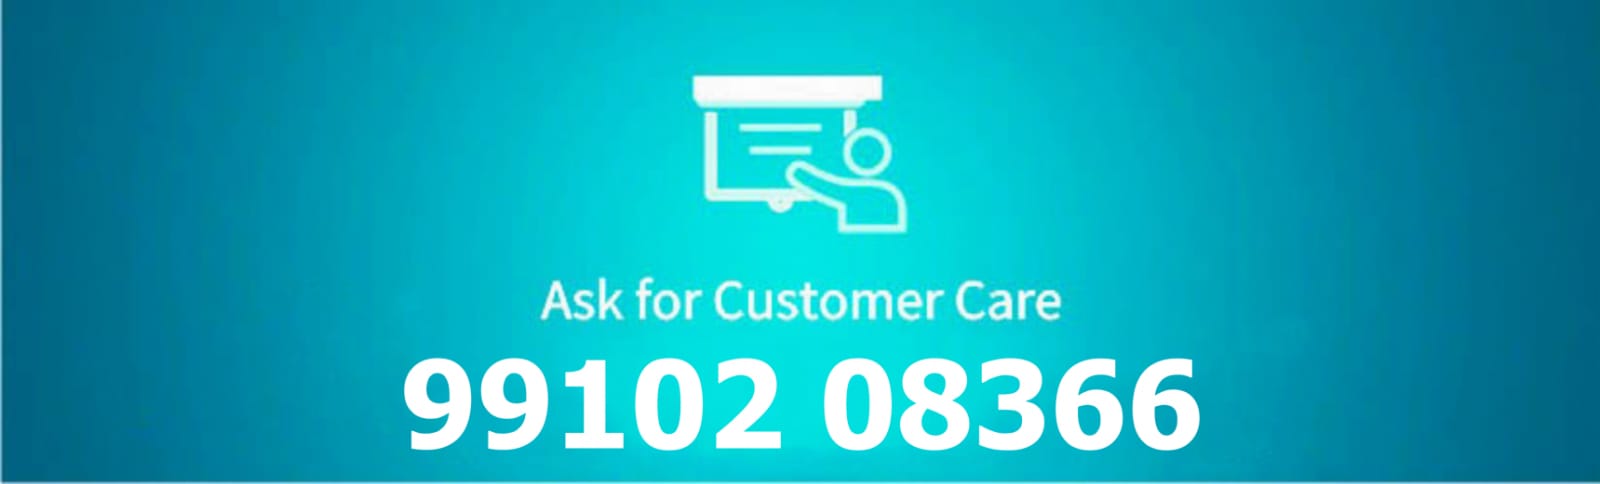 Customer Care - Online Publicity